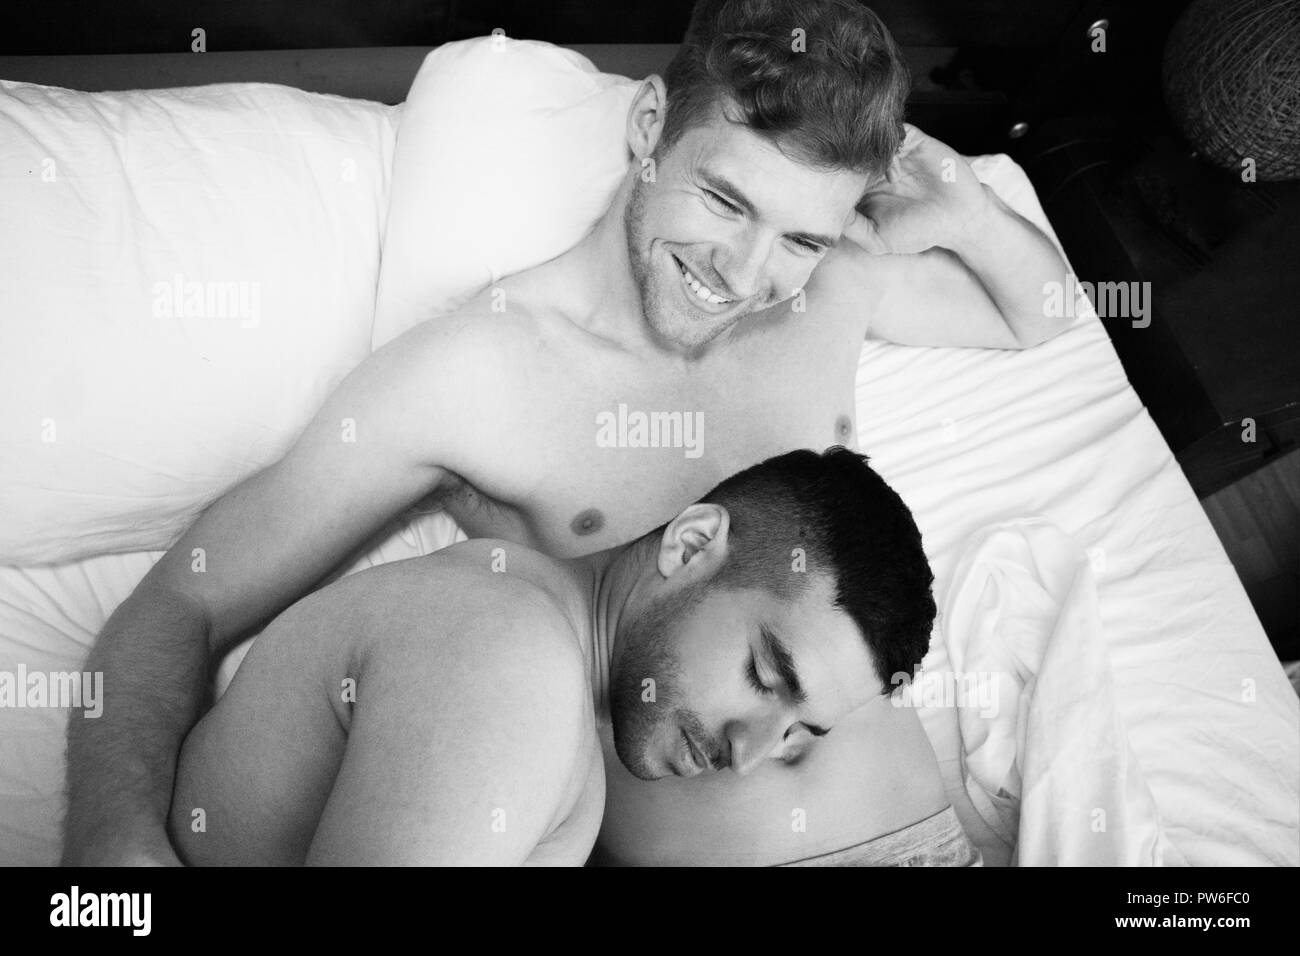 Sleep naked gay